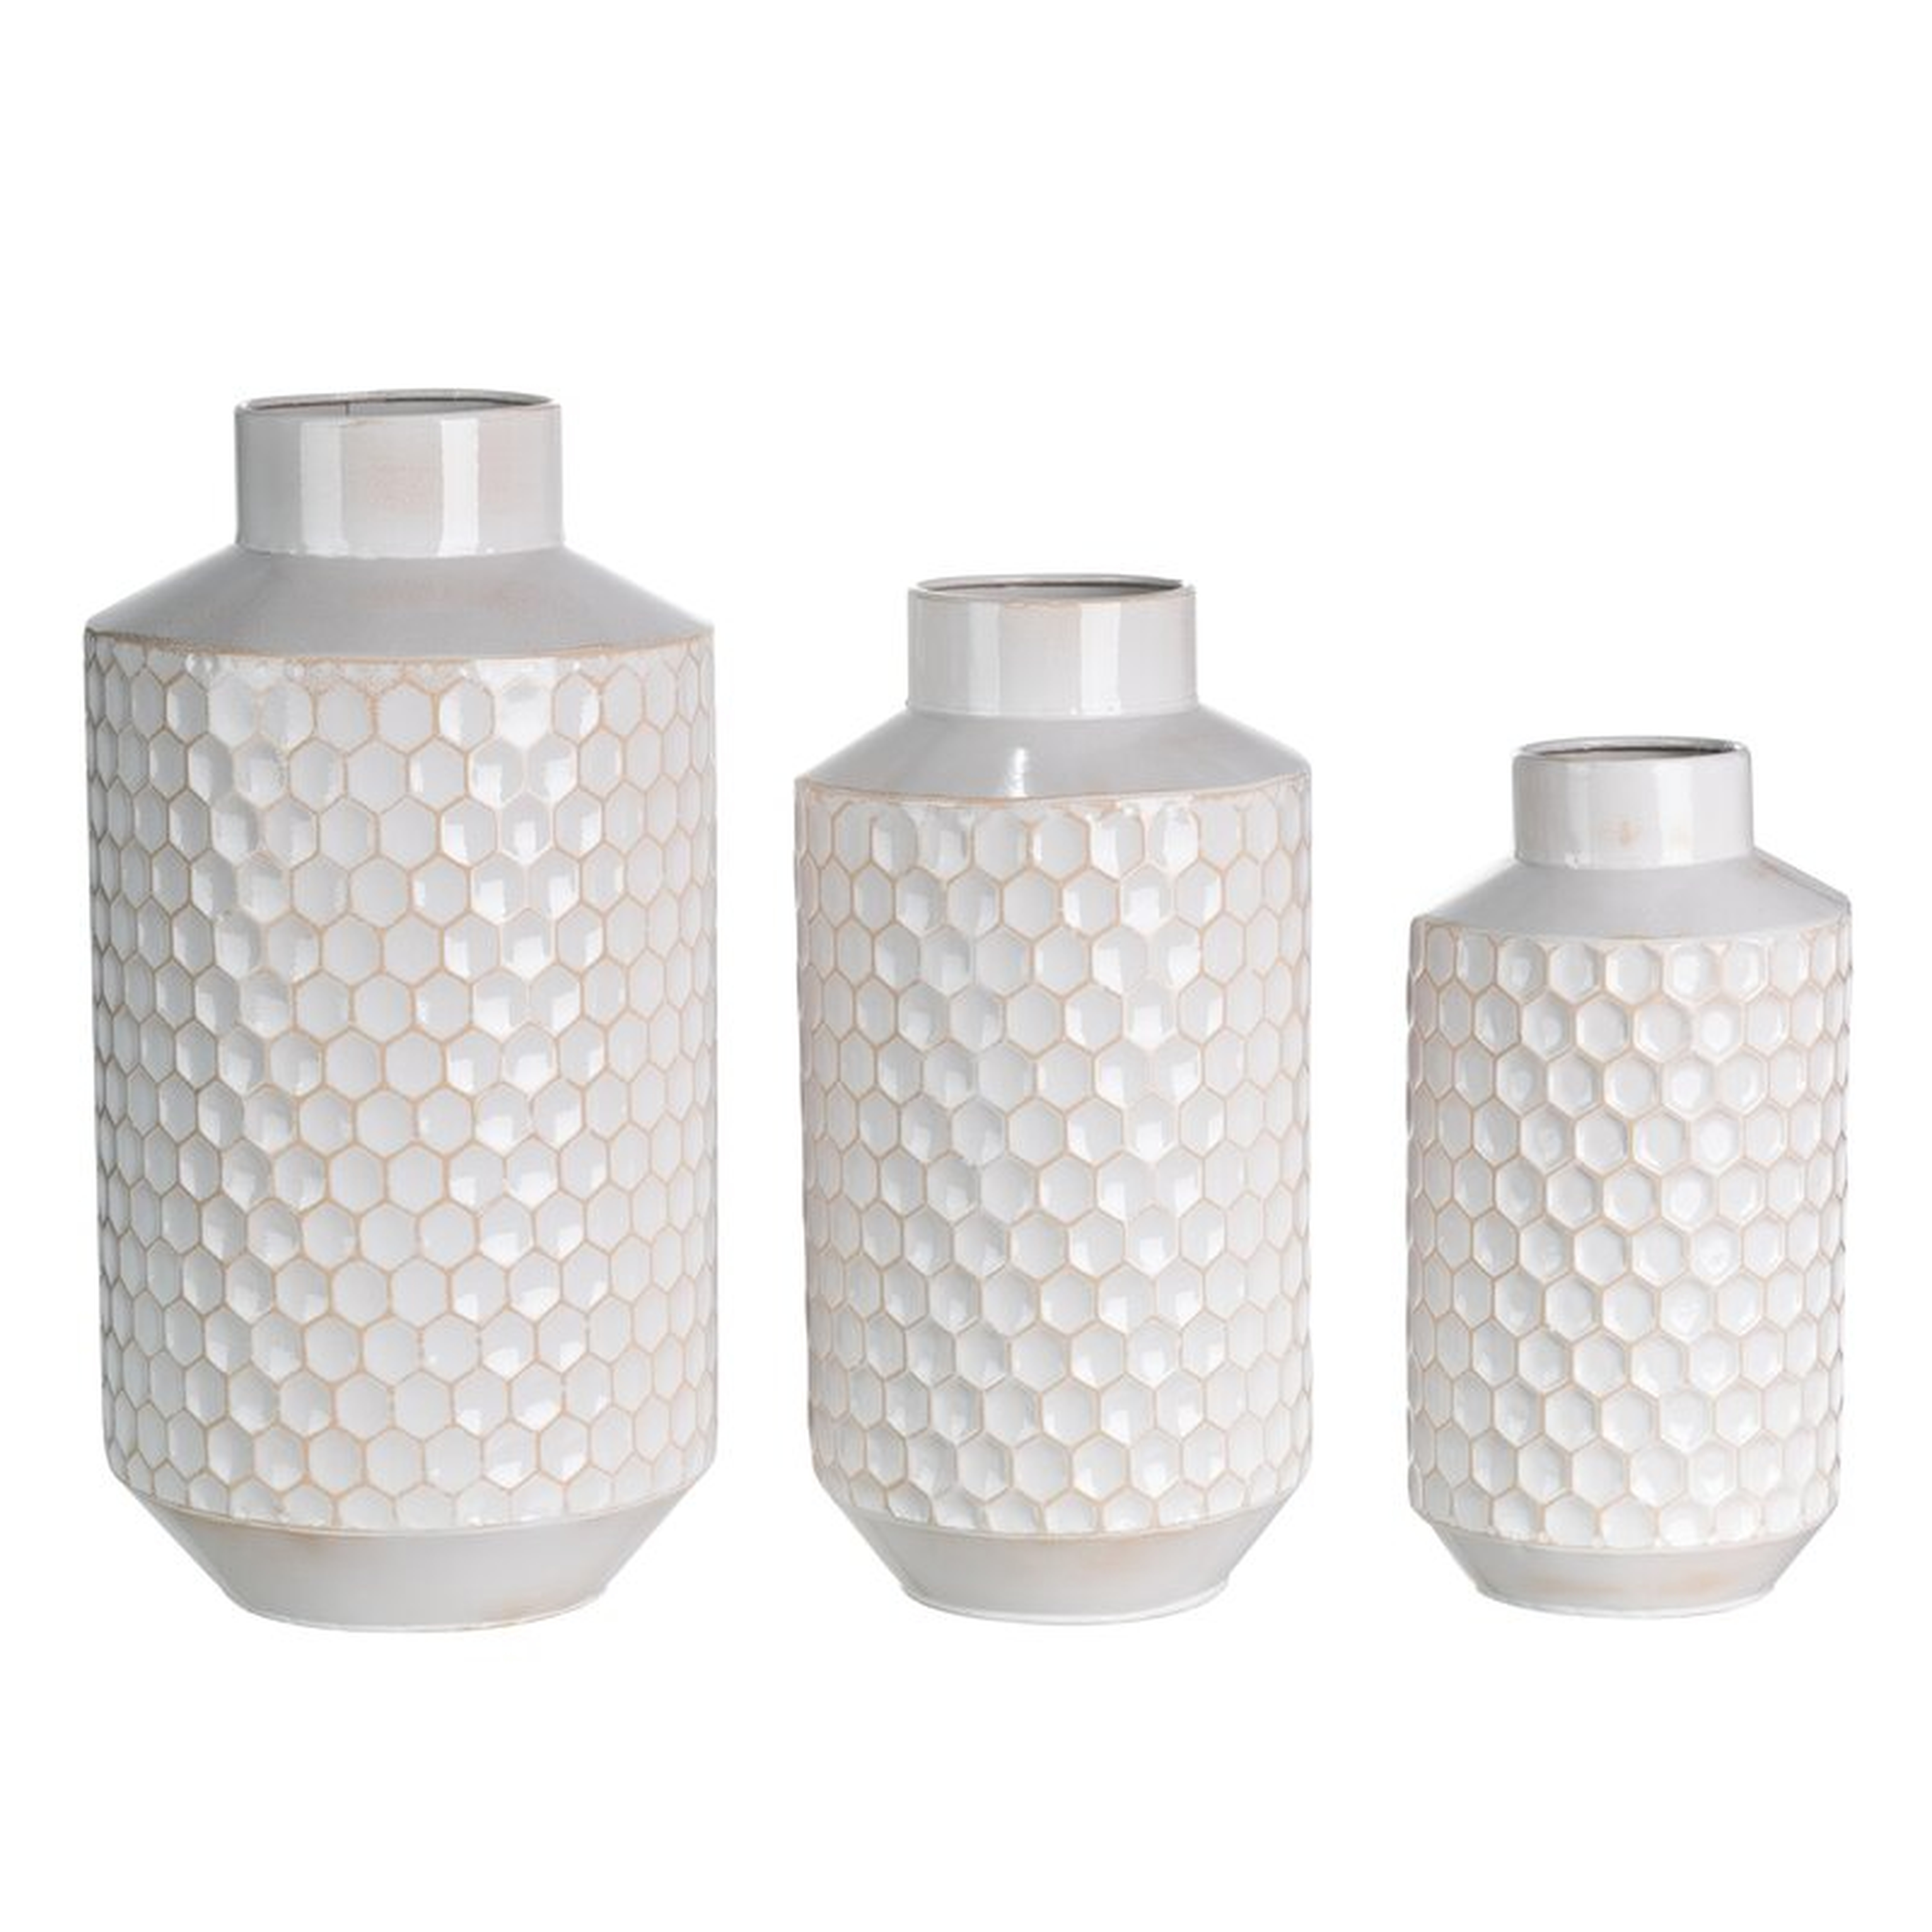 Hamid White Stainless Steel Table Vases, Set of 3 (BACK IN STOCK 12/9) - Wayfair